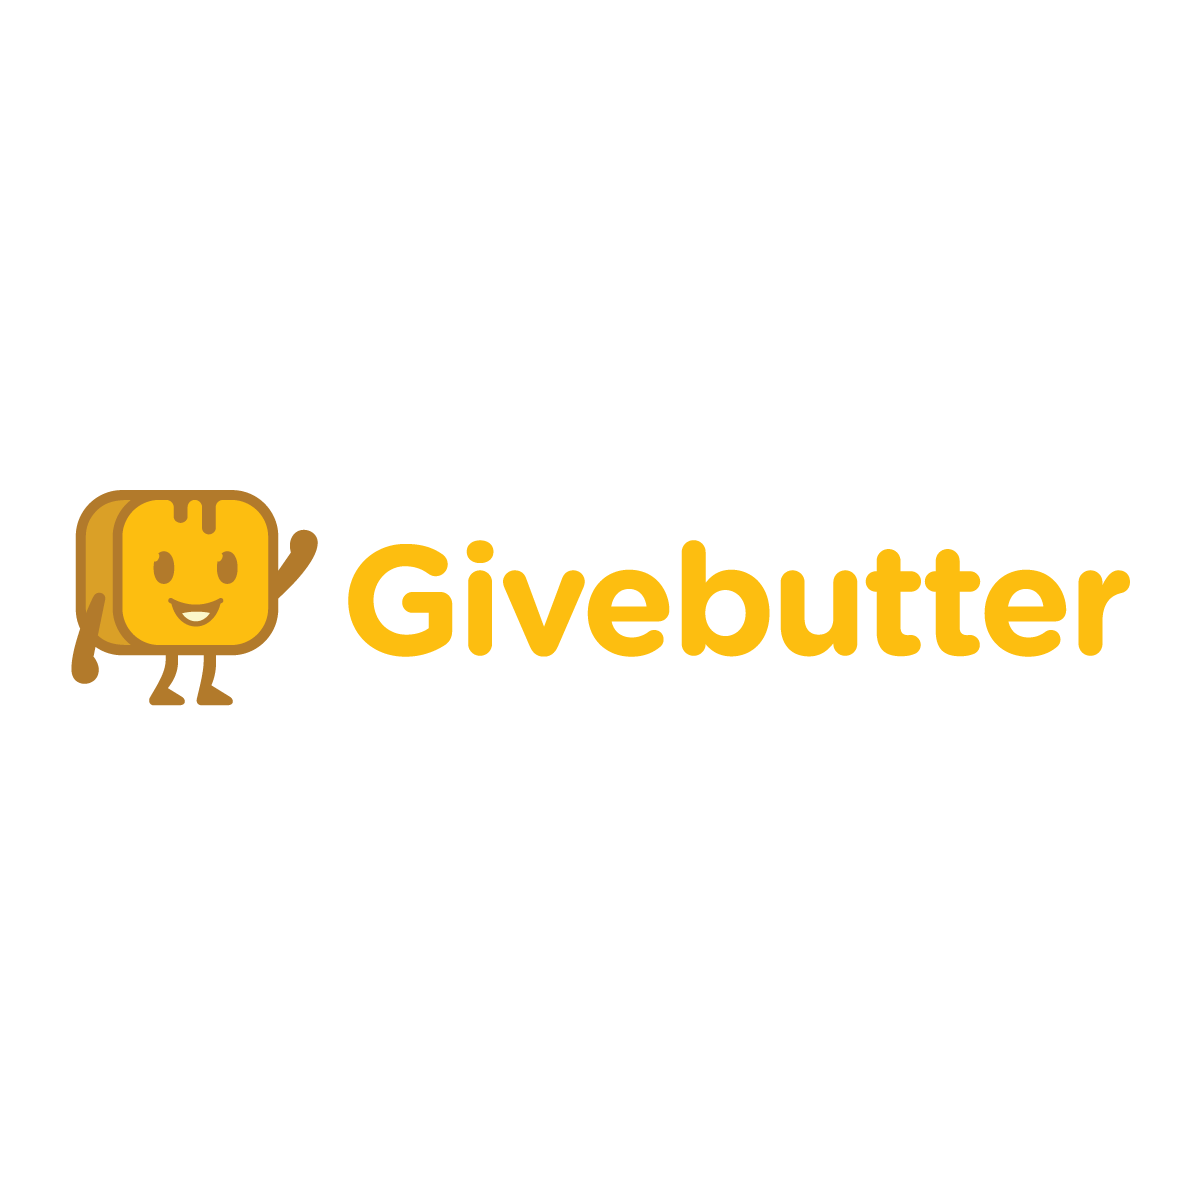 Givebutter